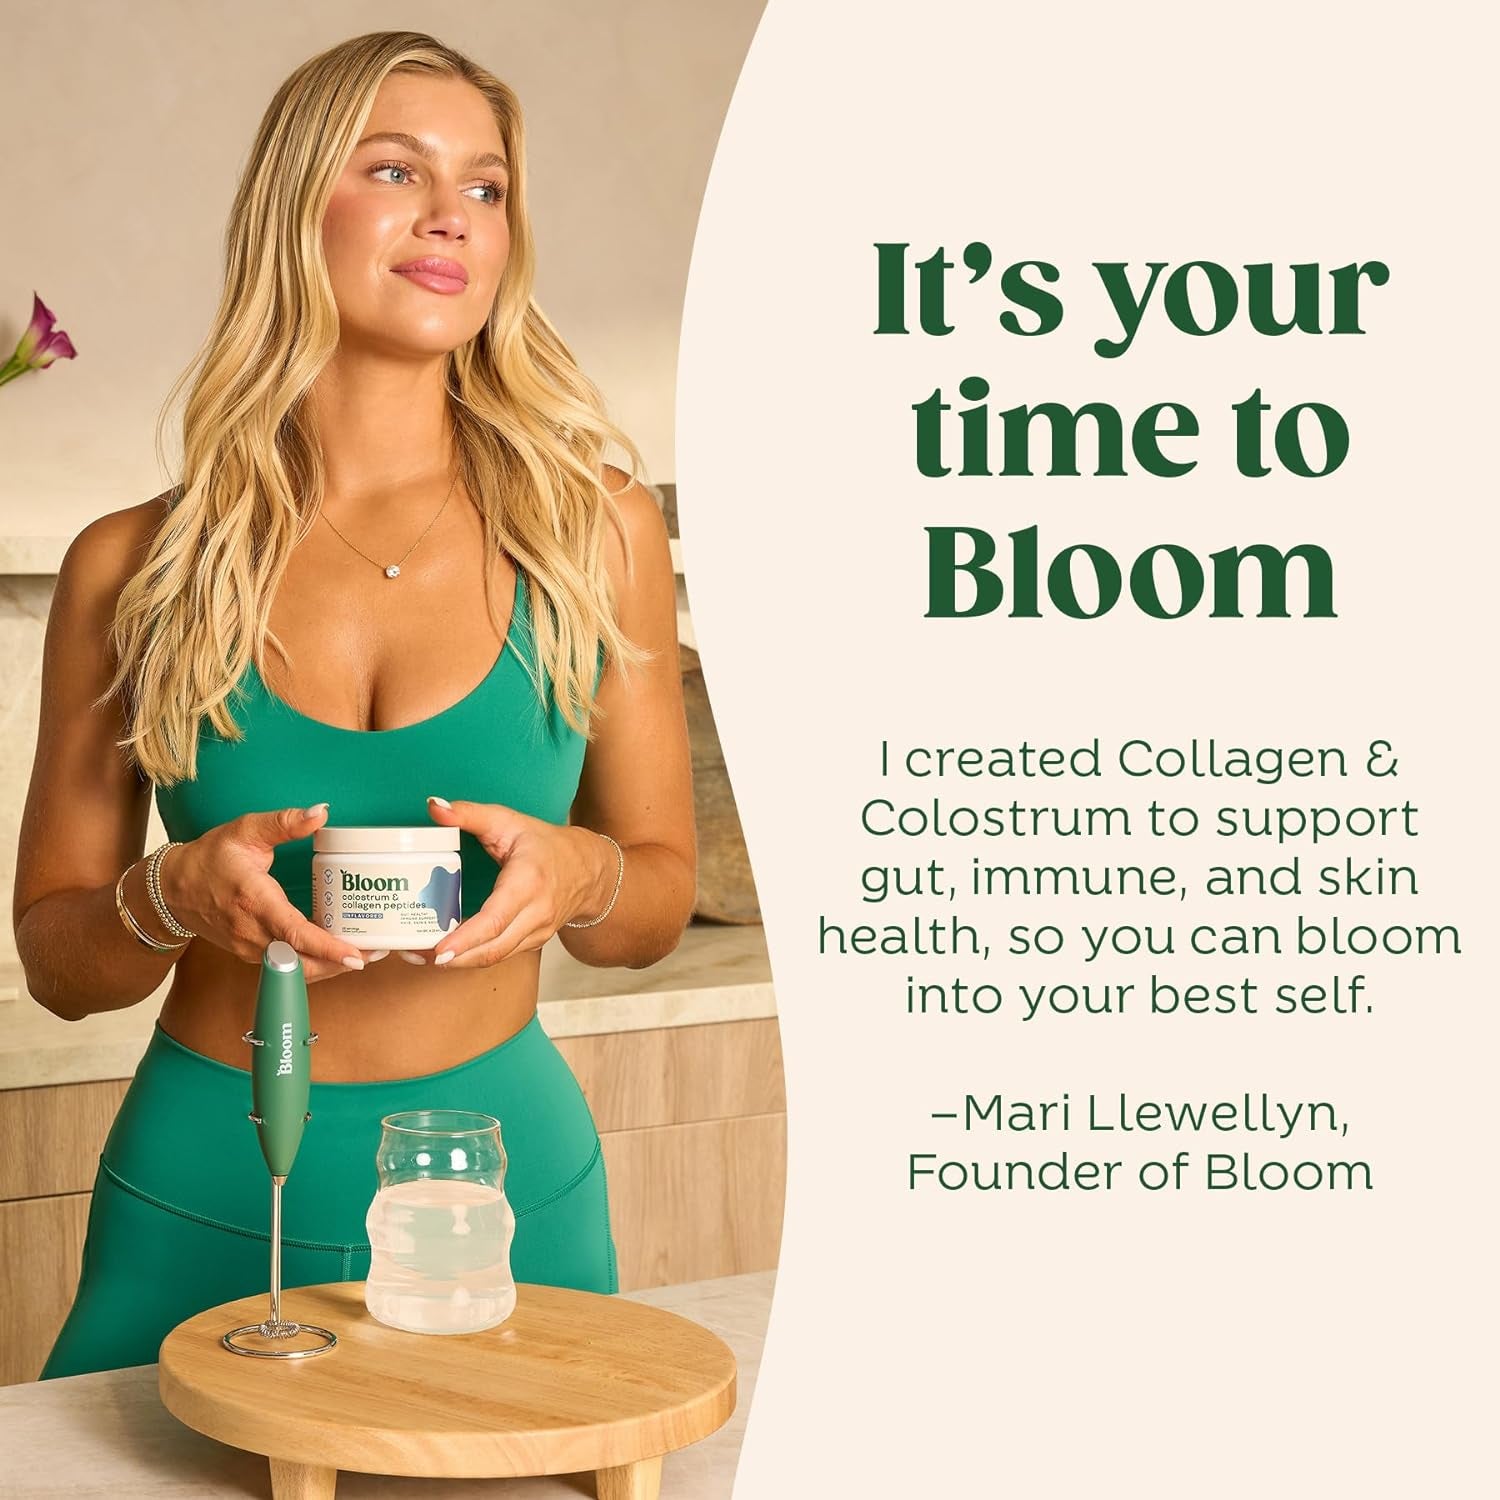 "Bloom Nutrition Premium Bovine Colostrum Powder - Gut Health, Immune Support, Hair Growth & Beauty Supplement - Gluten Free, Sugar Free - Unflavored Superfood with 40% IgG - 25 Servings"